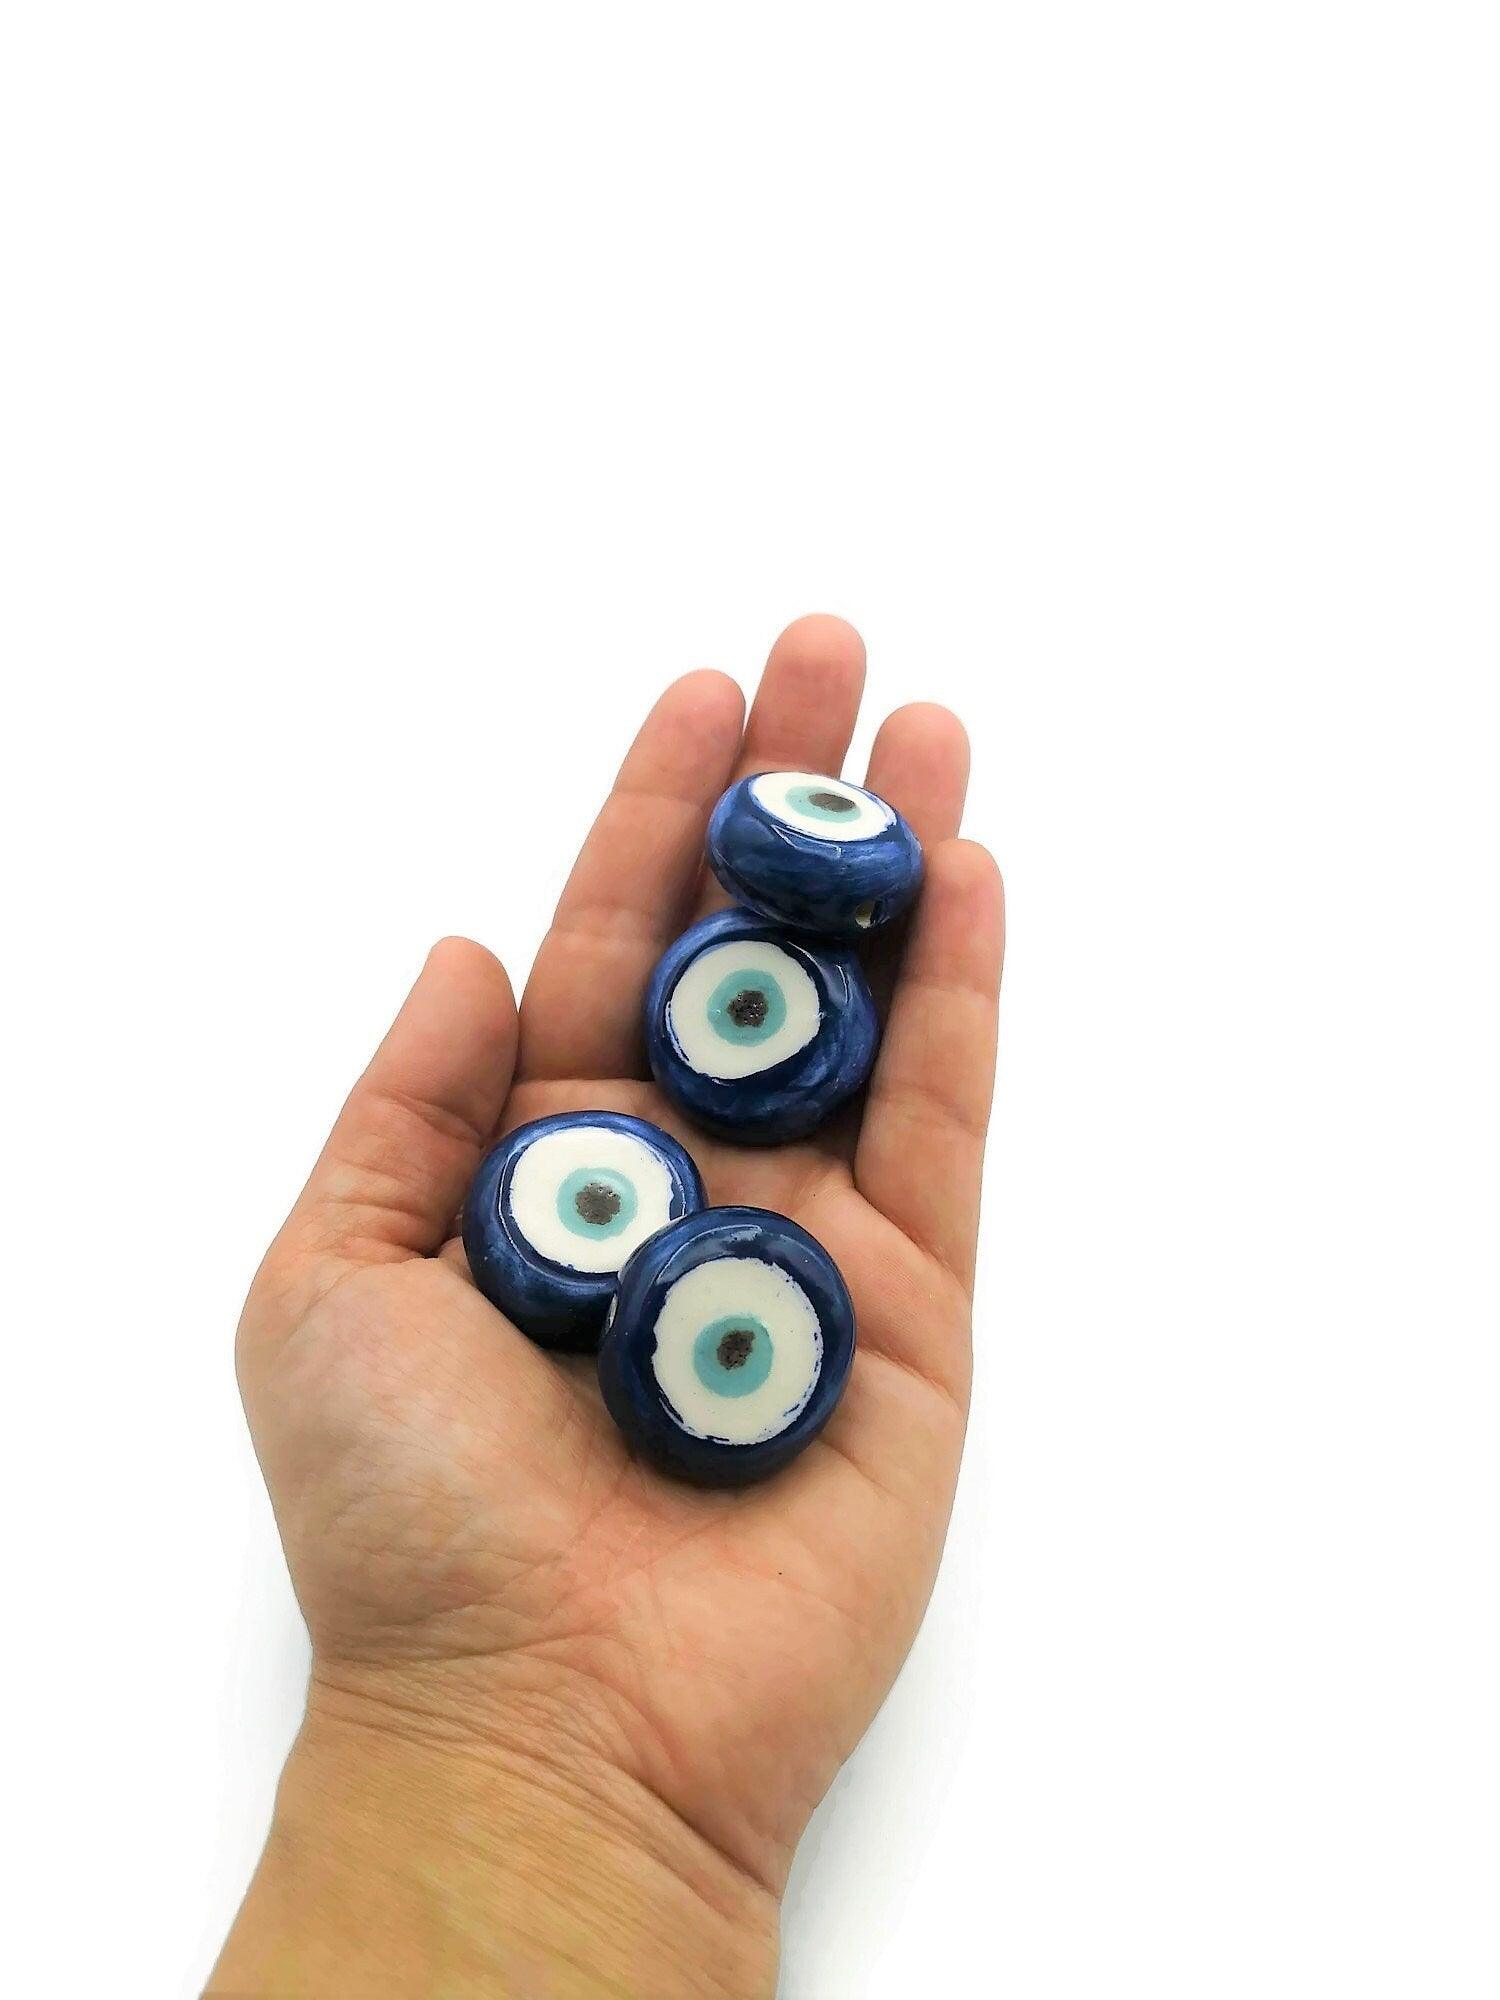 1Pc Blue Evil Eye Beads For Jewelry Making, Handmade Ceramic Macrame Beads, Extra Large Clay Beads, Round Unusual Decorative Porcelain Beads - Ceramica Ana Rafael